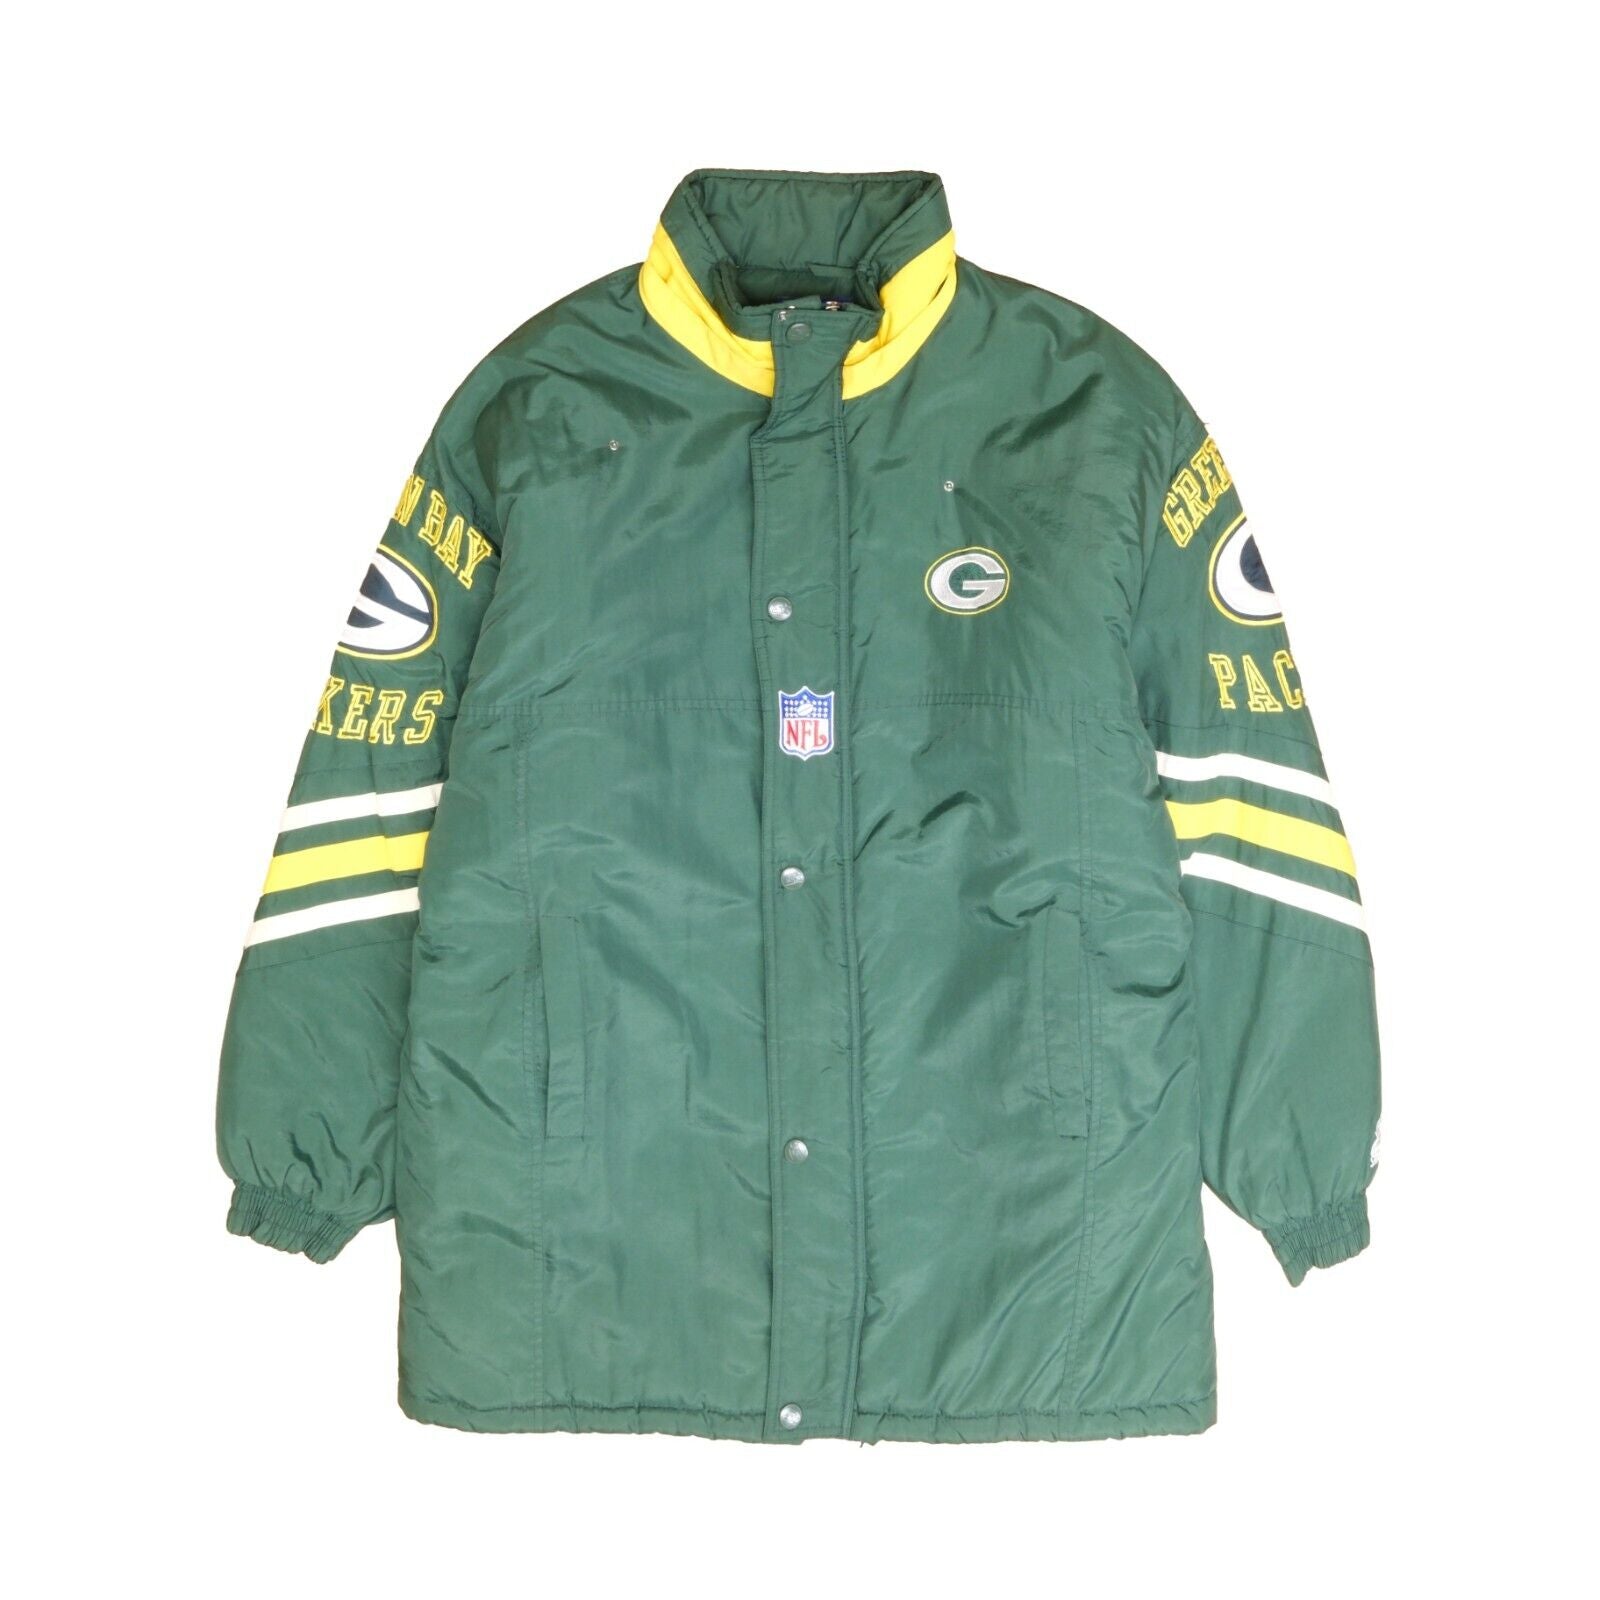 Vintage Dallas Cowboys Logo Athletic NFL Pro Line Puffer Jacket Coat Size  Large